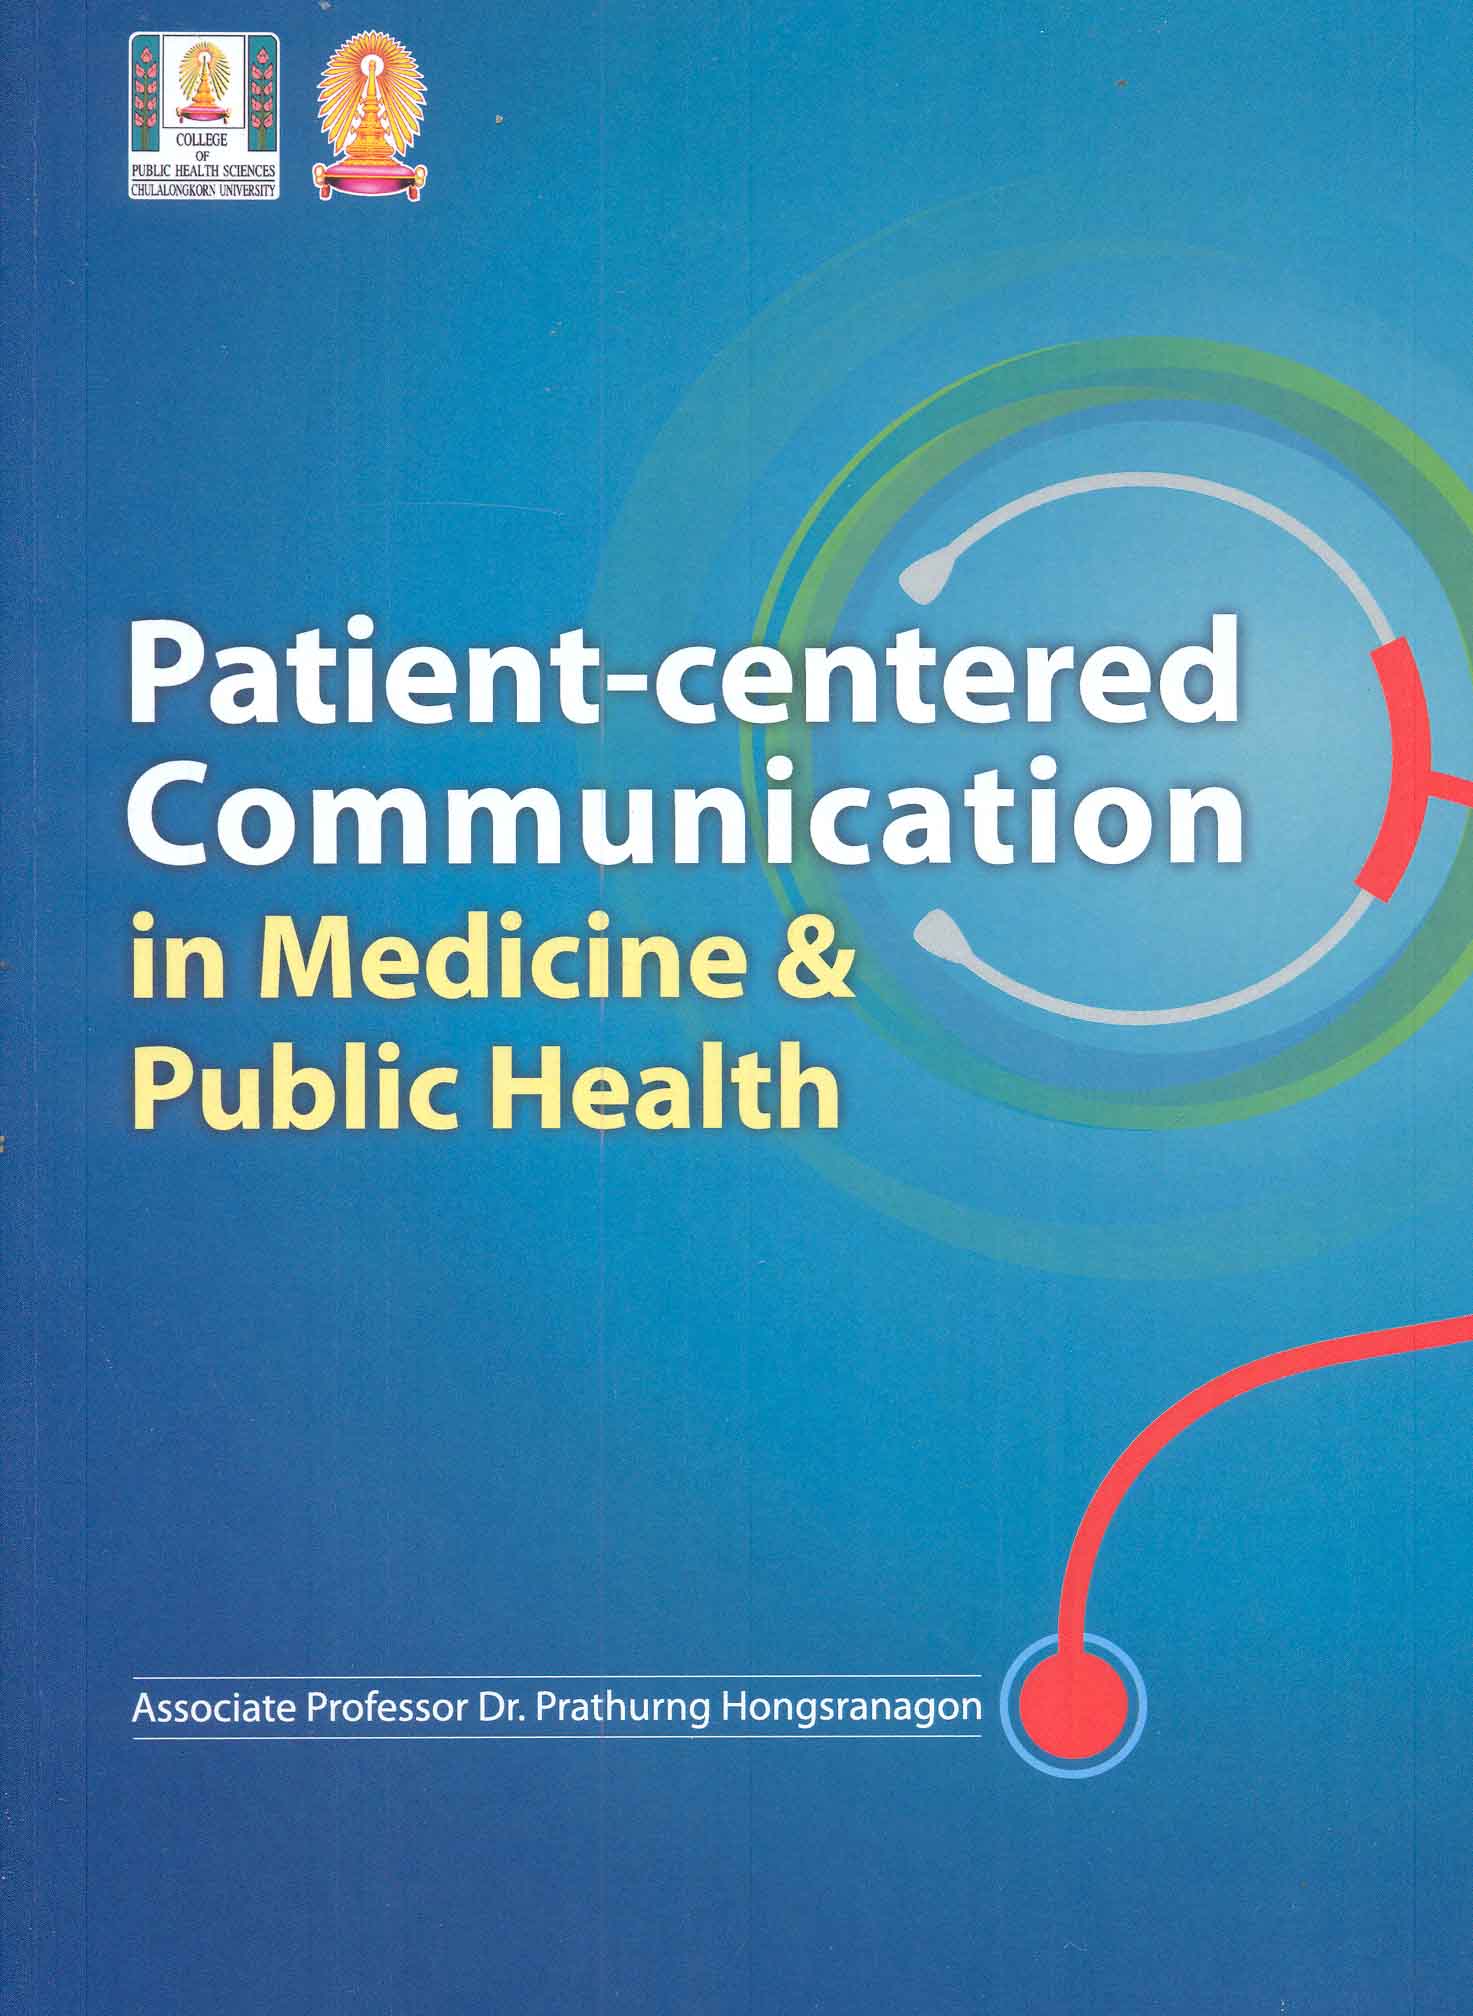 Patient-centered communication in Medicine & Public Health